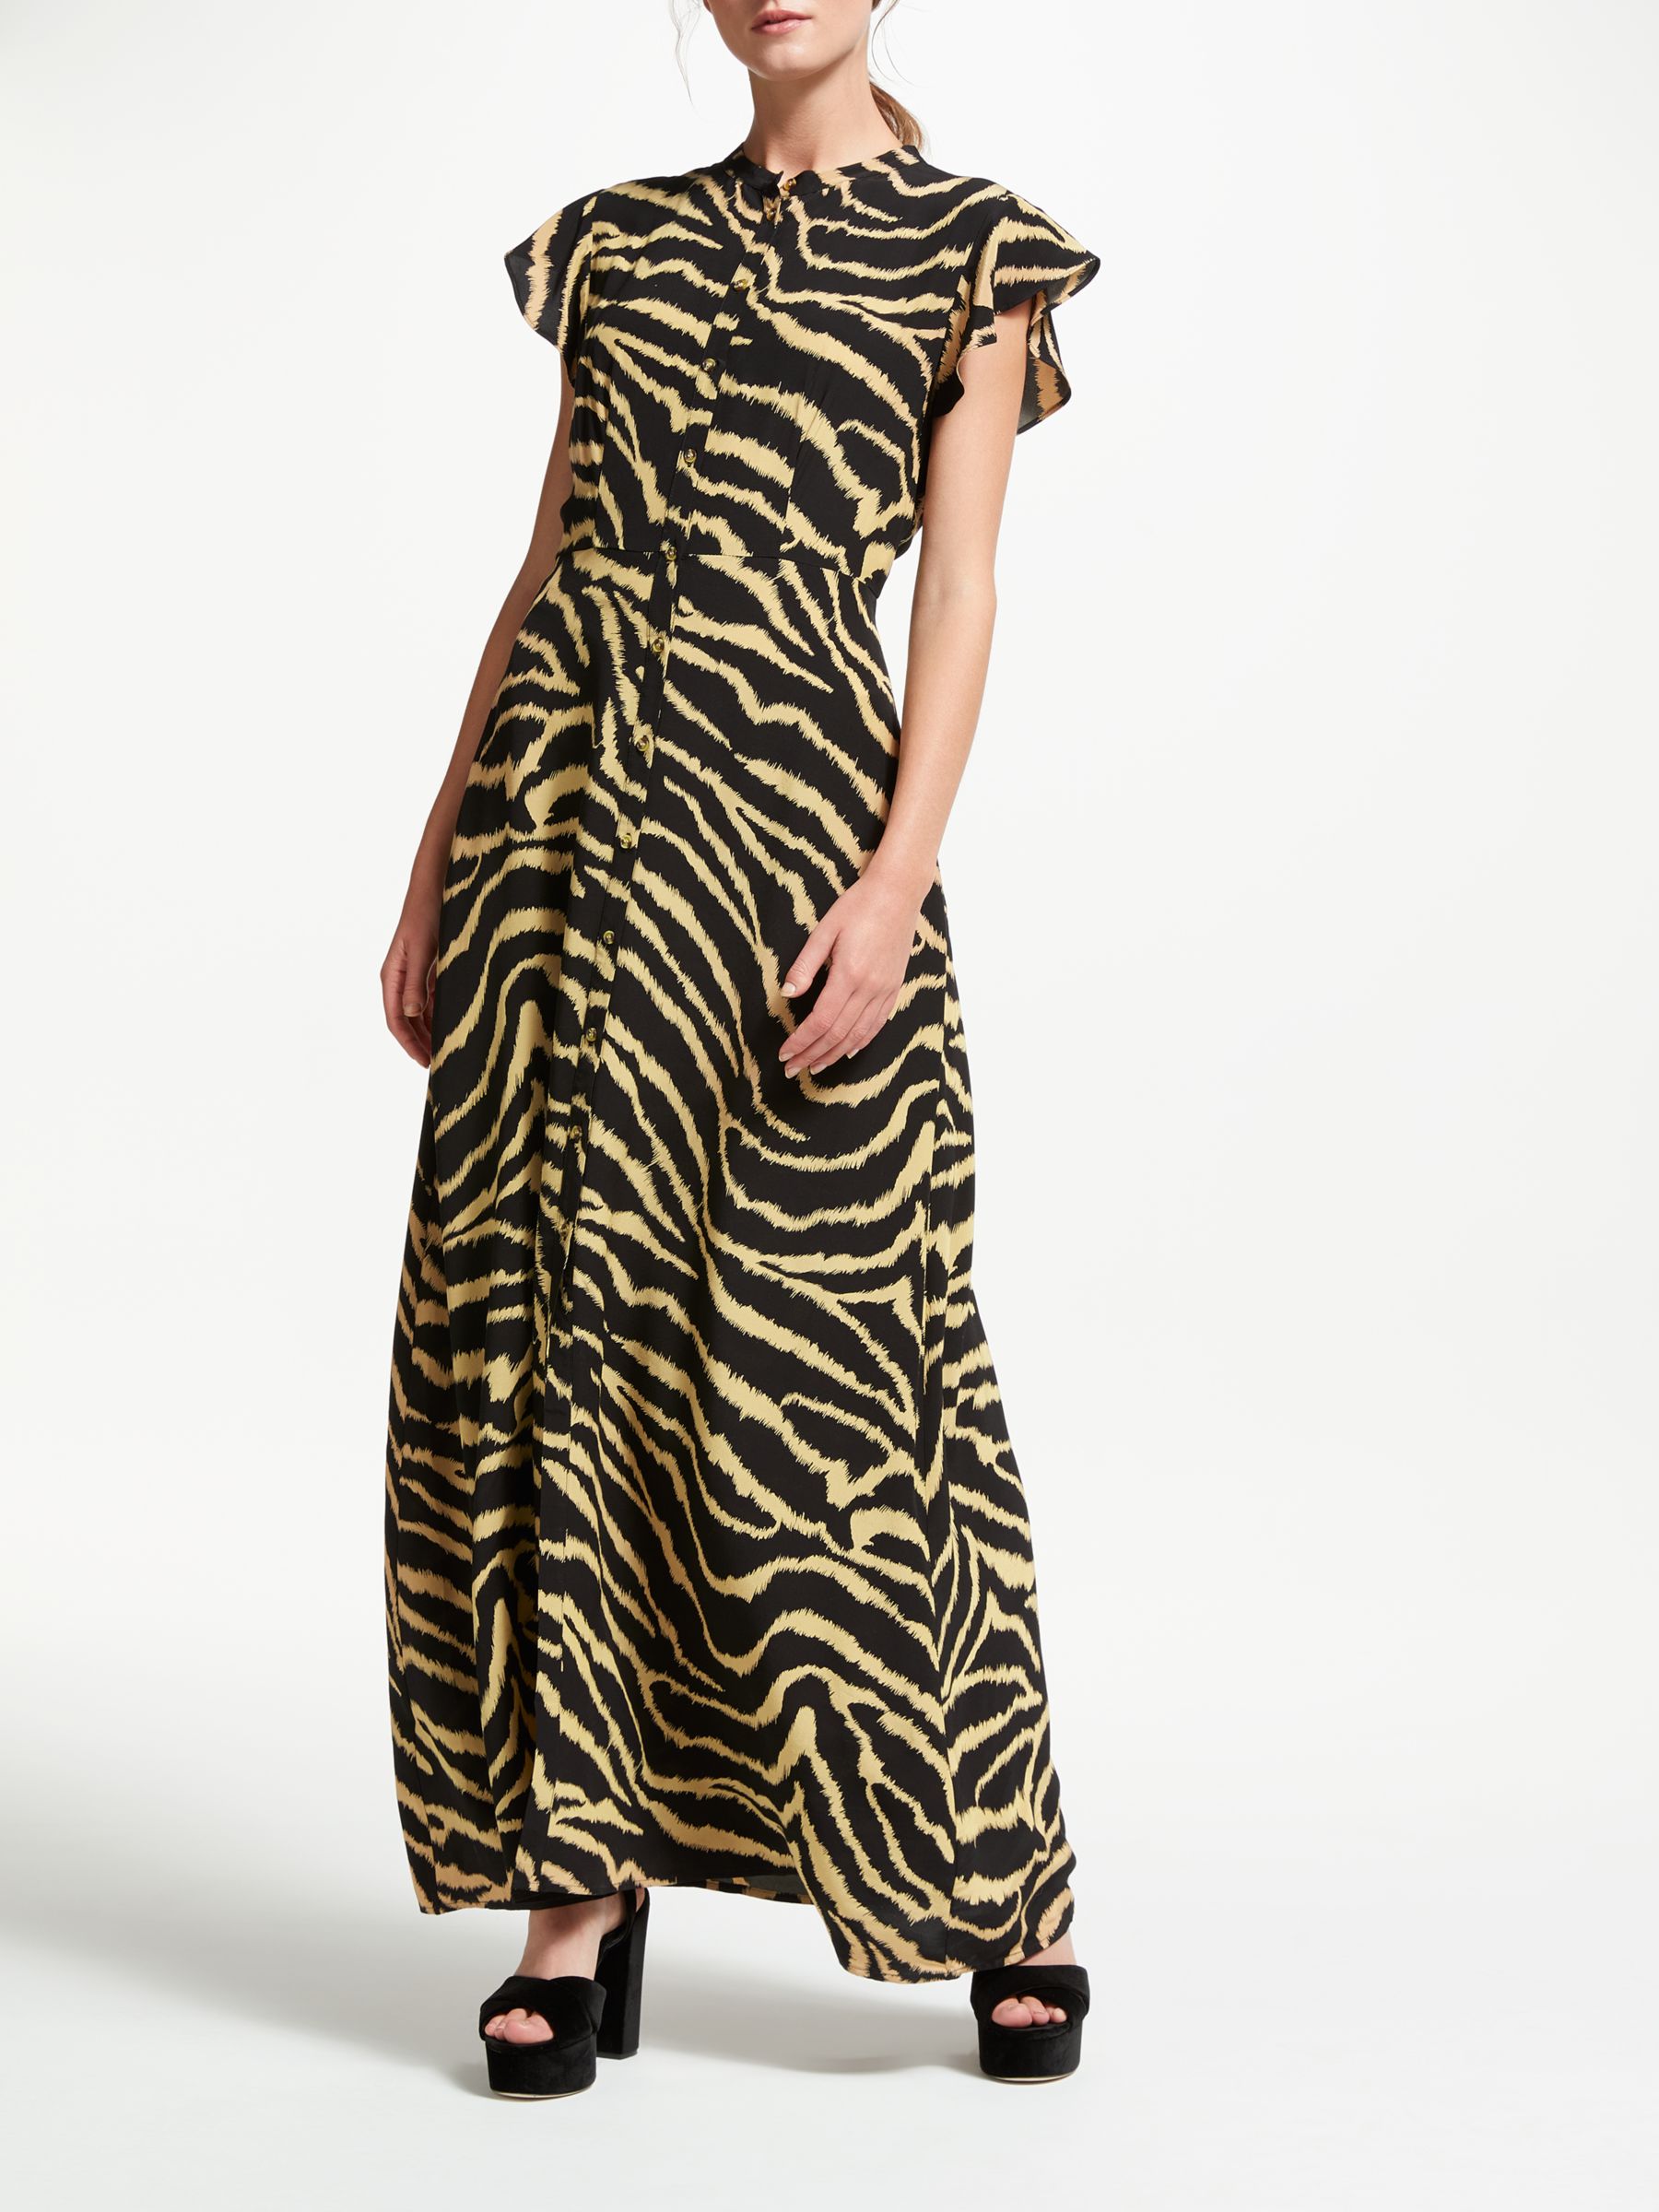 Somerset by Alice Temperley Zebra Cap Sleeve Maxi Dress, Black/Multi